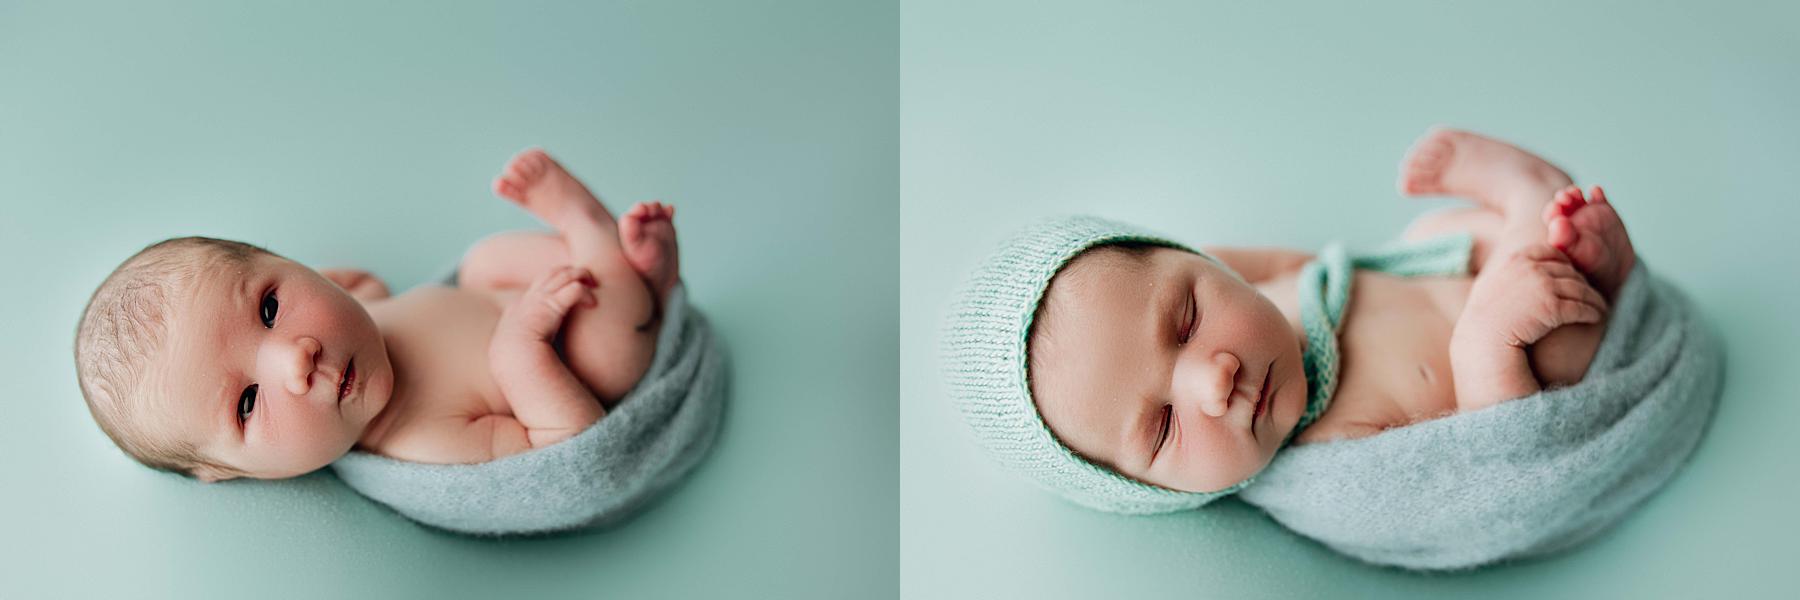 Concord newborn photographer, pleasant hill photographer, Jessica mccoyphotography, natural newborn photographer, neutral newborn poses, Bay Area newborn photographer